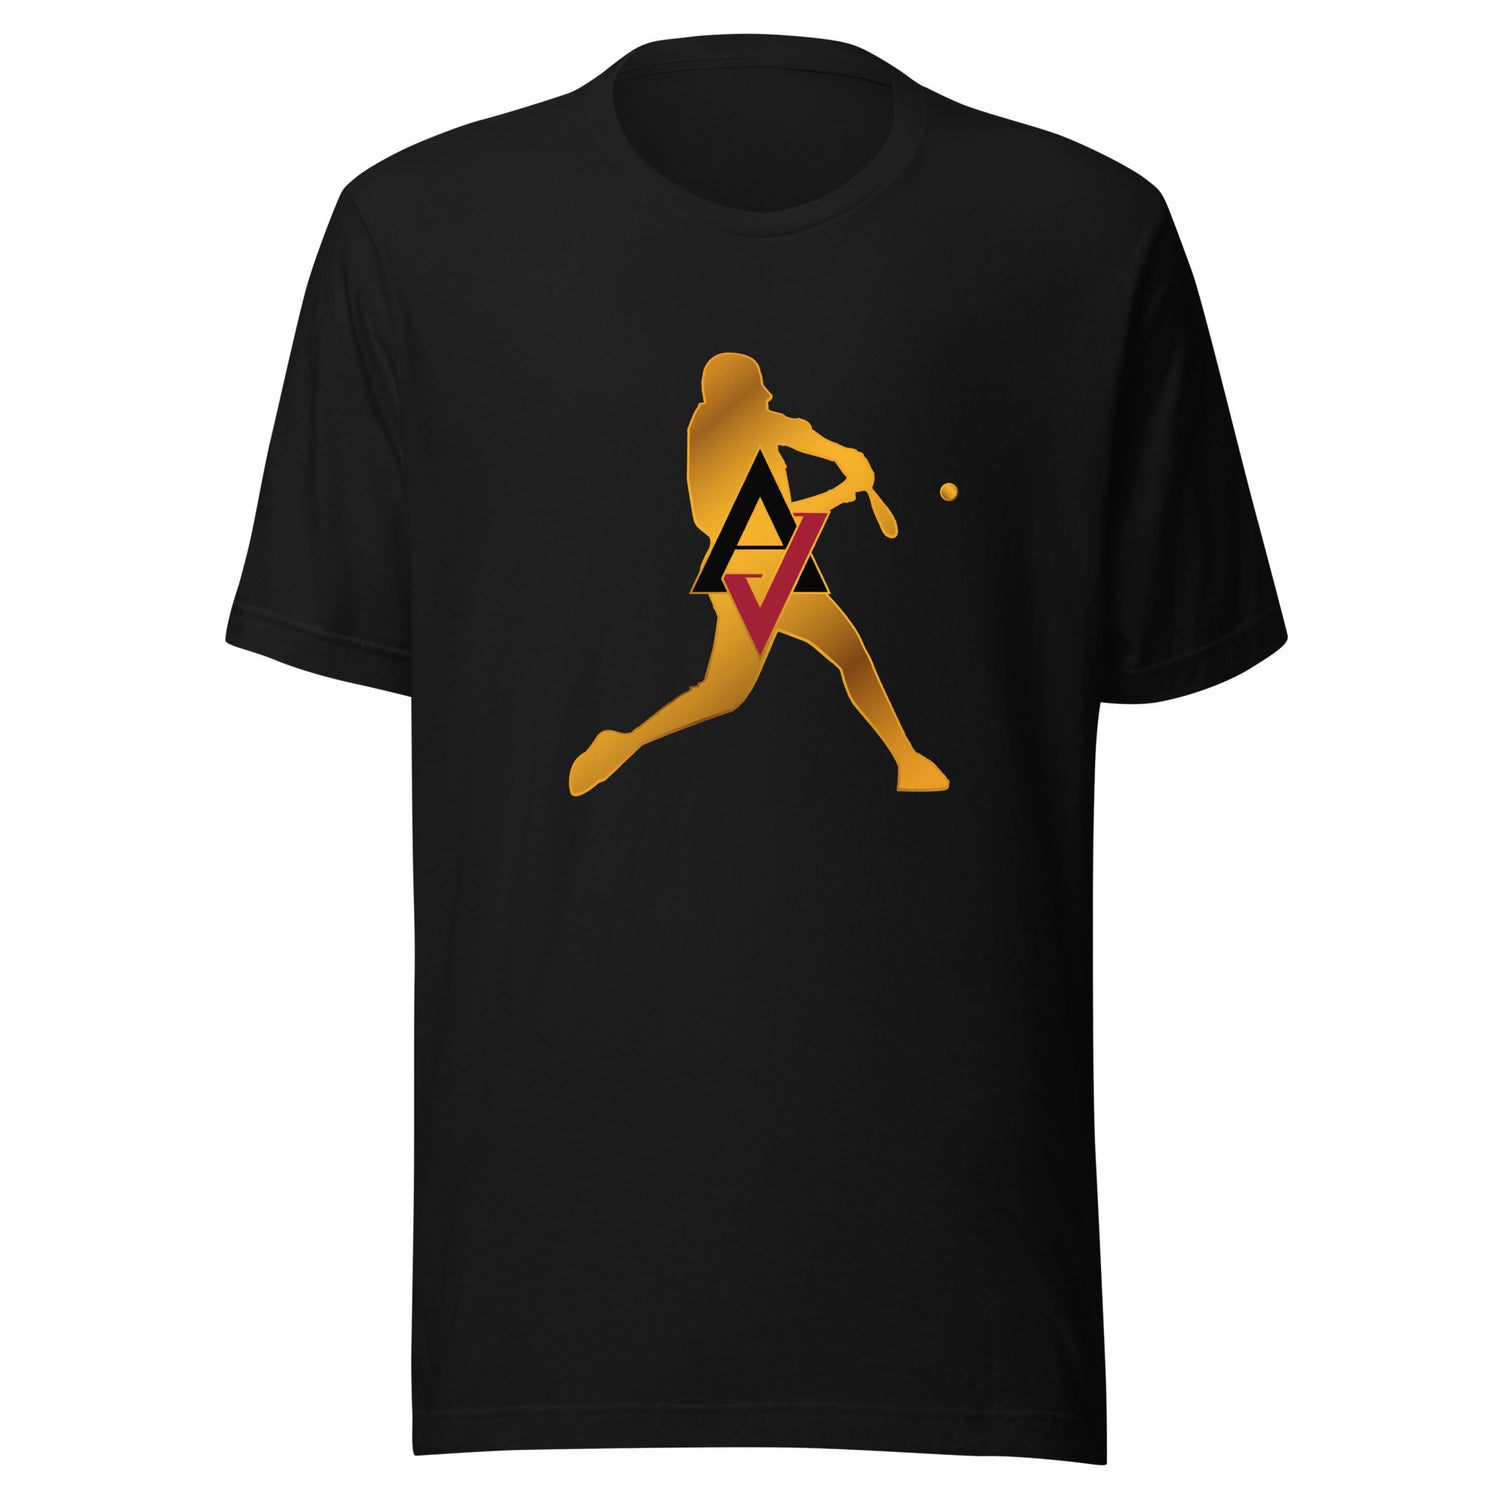 AJ Vukovich "Classic" t-shirt - Fan Arch